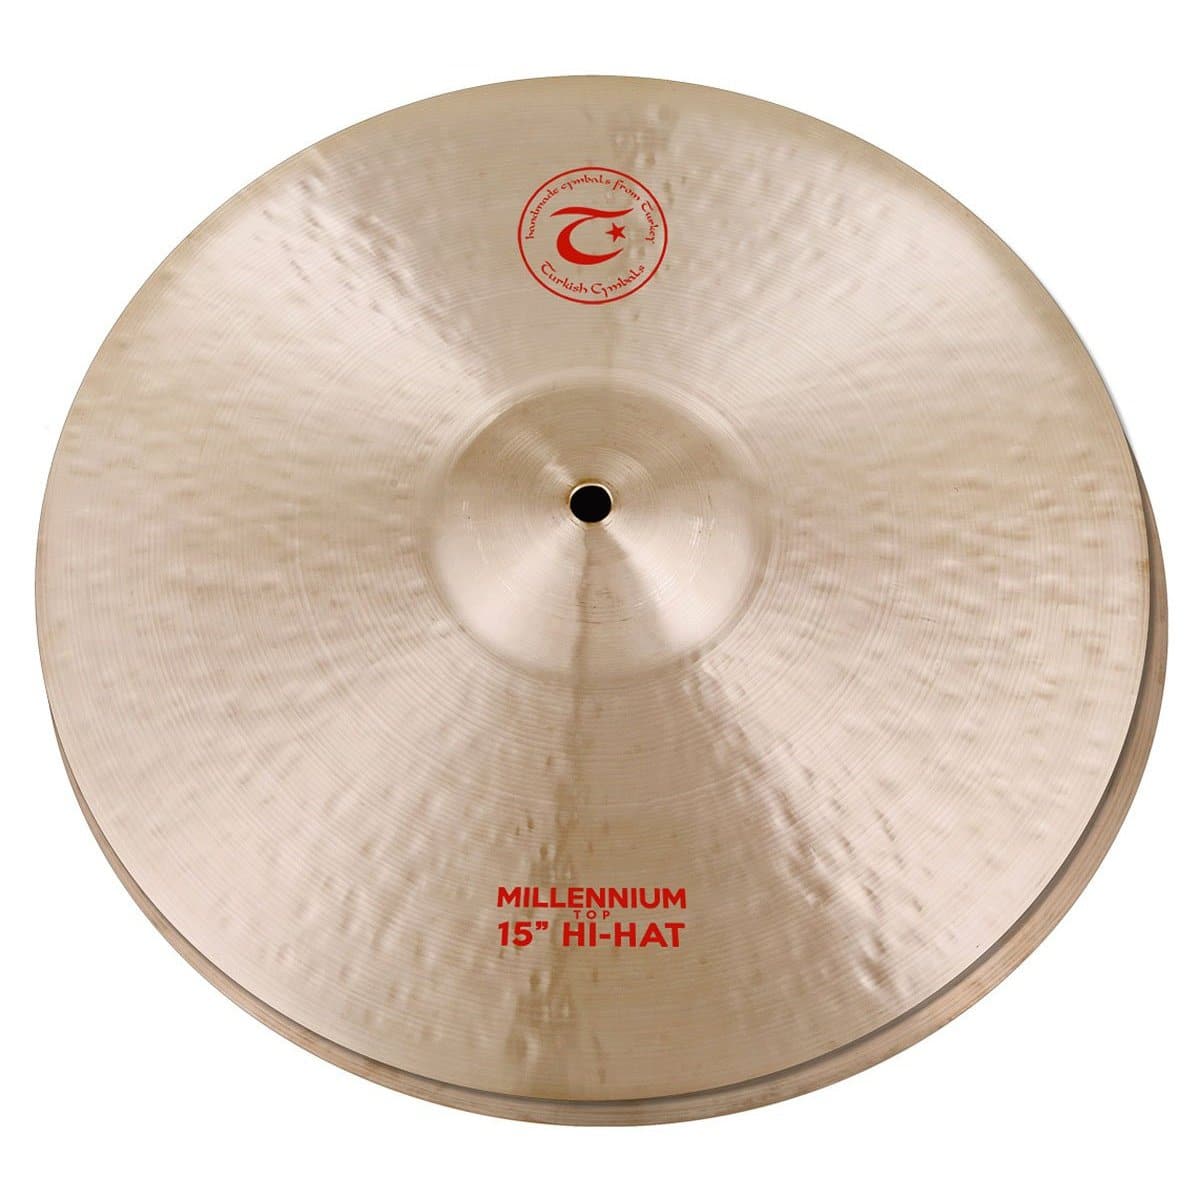 Turkish Millennium Hi Hat Cymbals 15" 1234/1396 grams